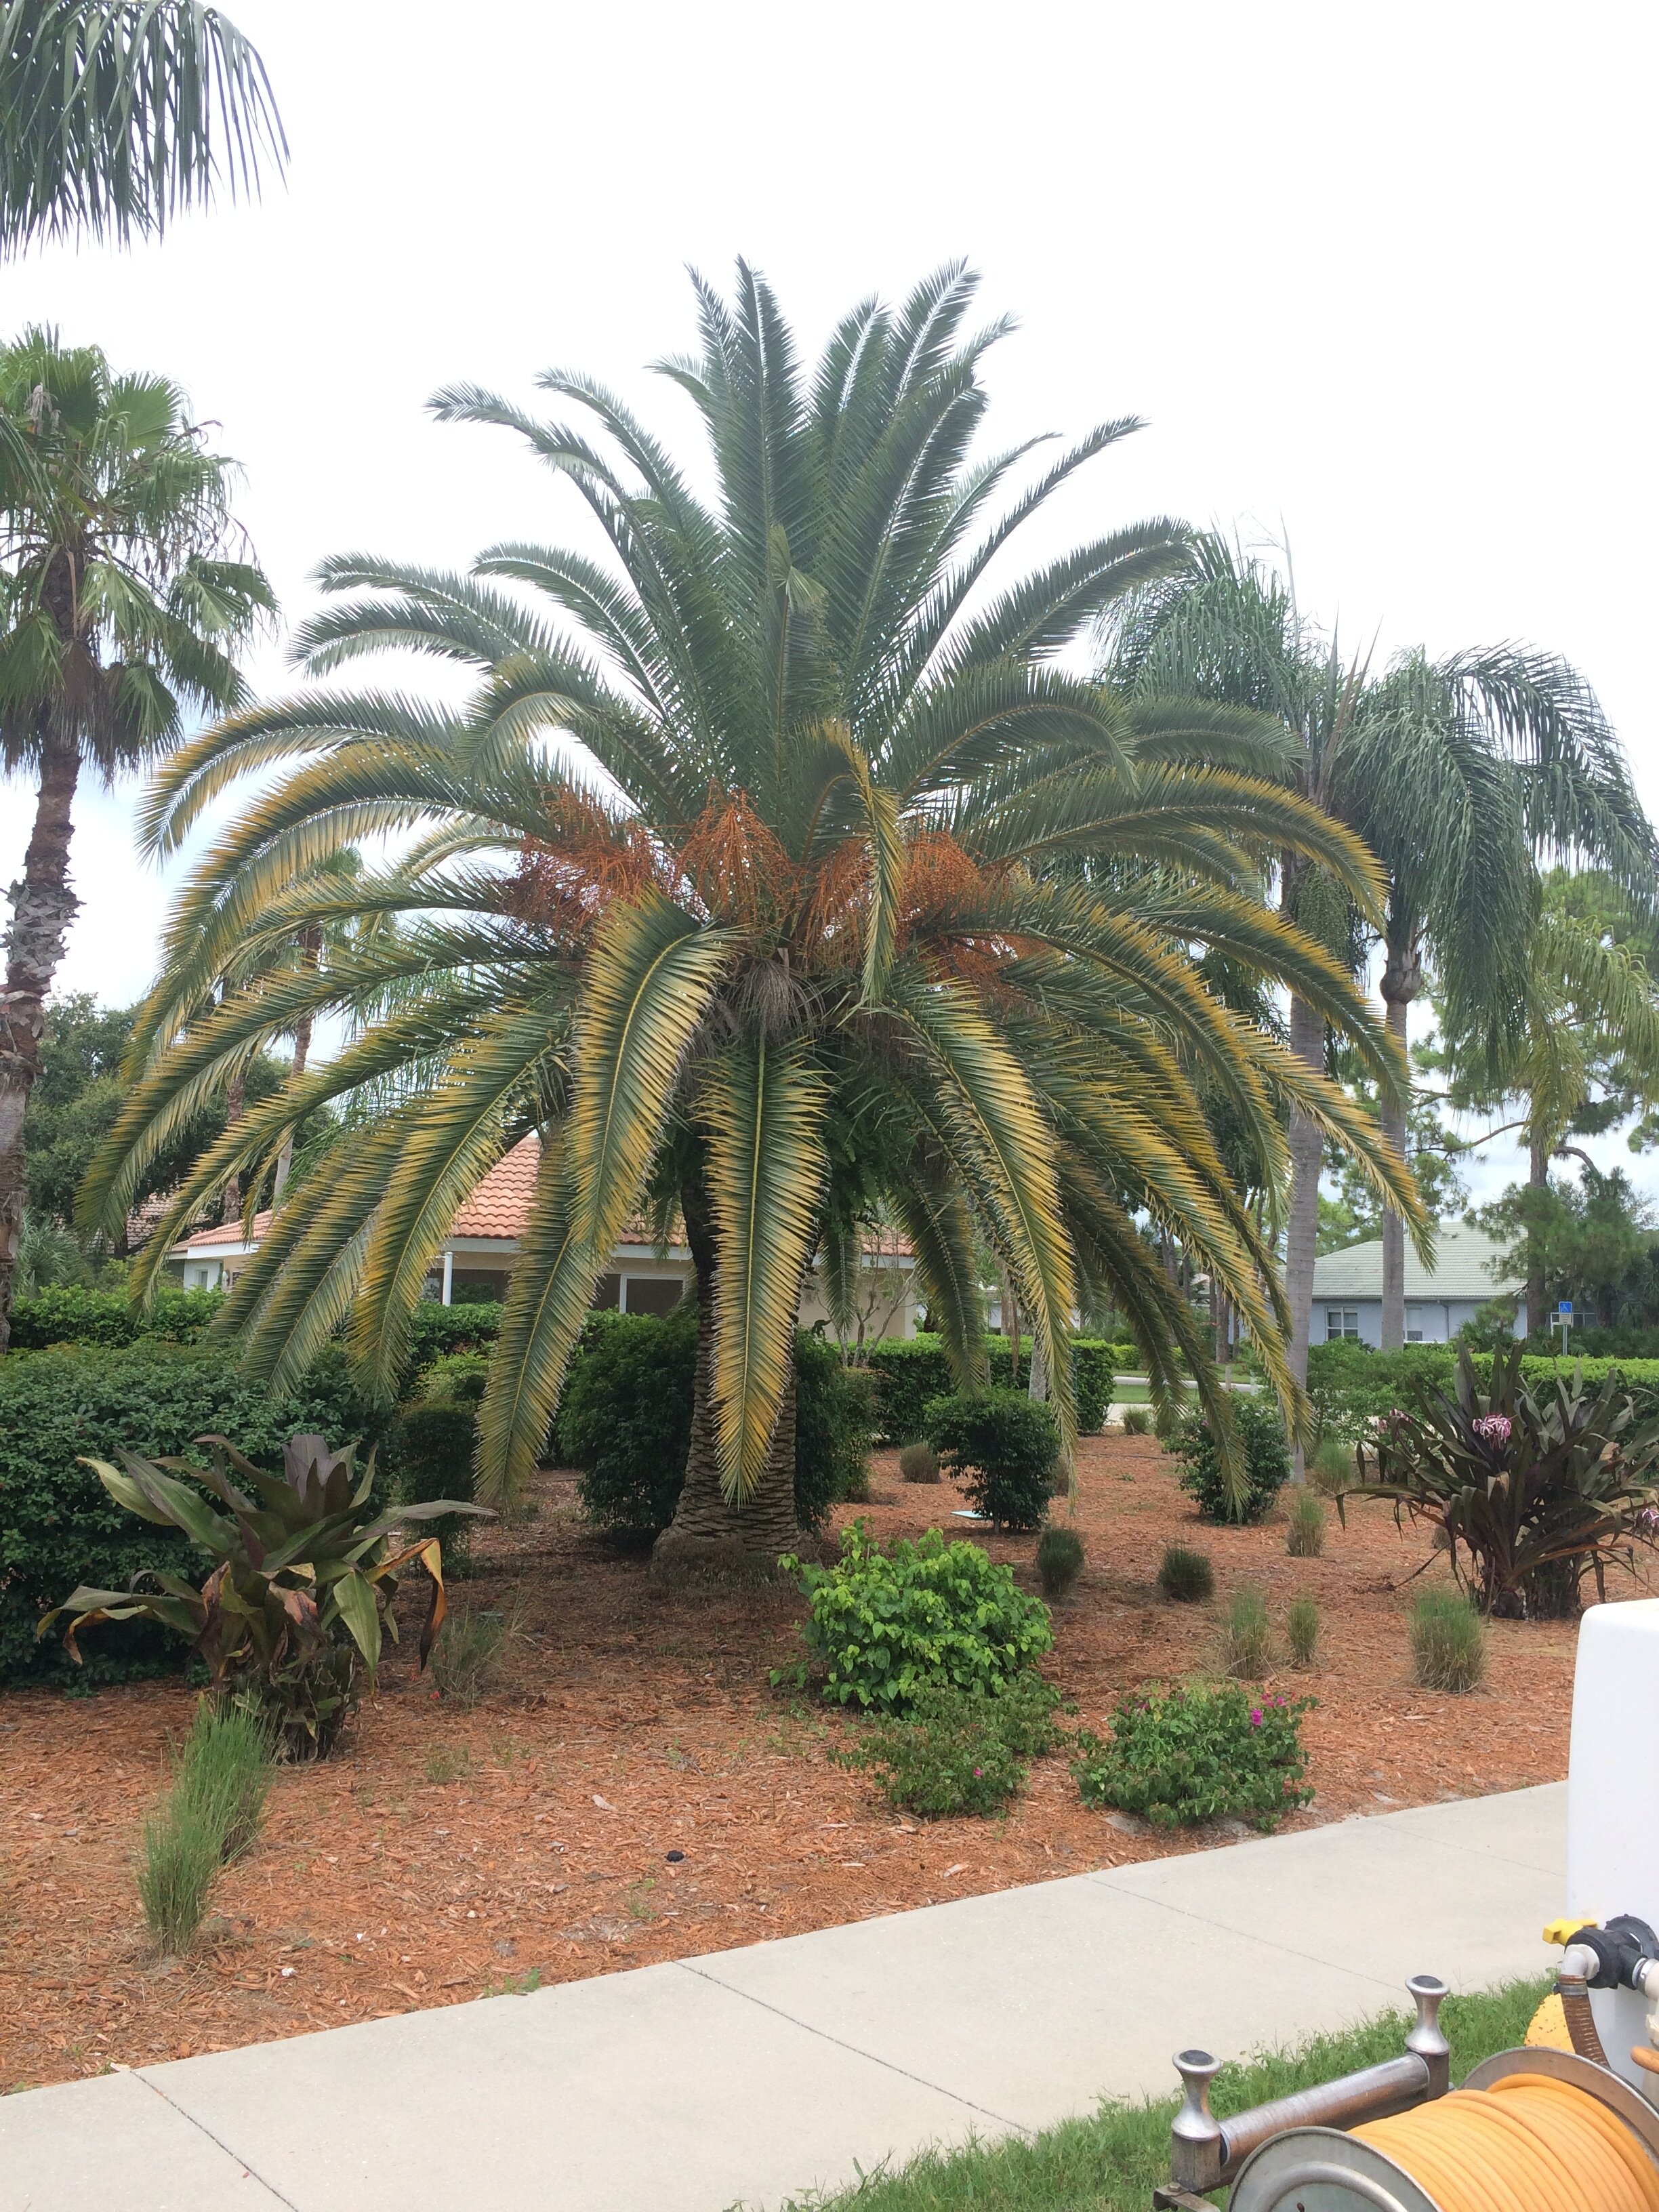 Canary Island Date Palm 